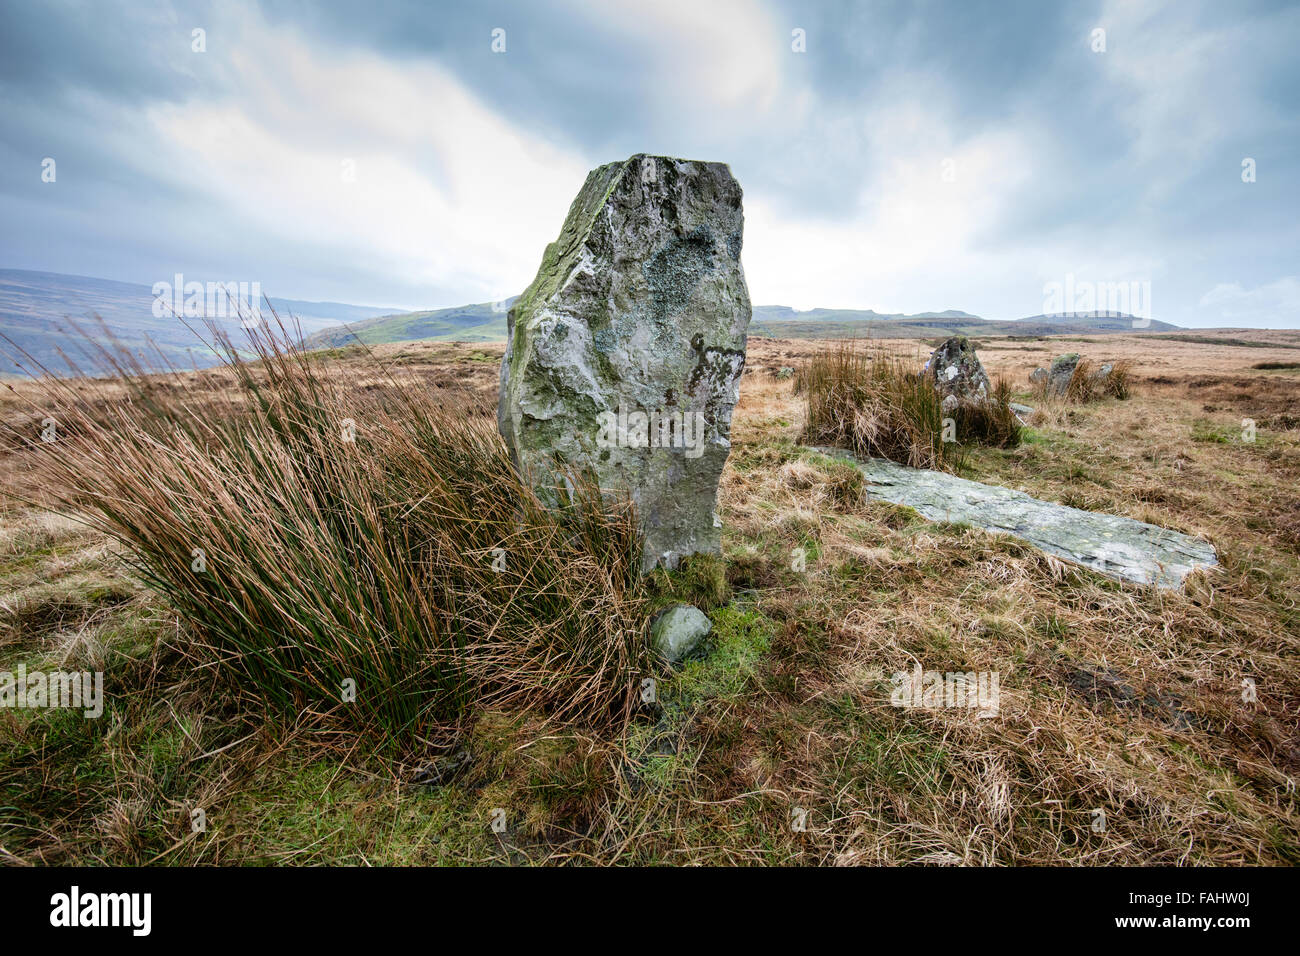 Spricht Maen Stein Zeile auf Moorland oberhalb Glyntawe in Swansea Tal Brecon Beacons South Wales Großbritannien Stockfoto